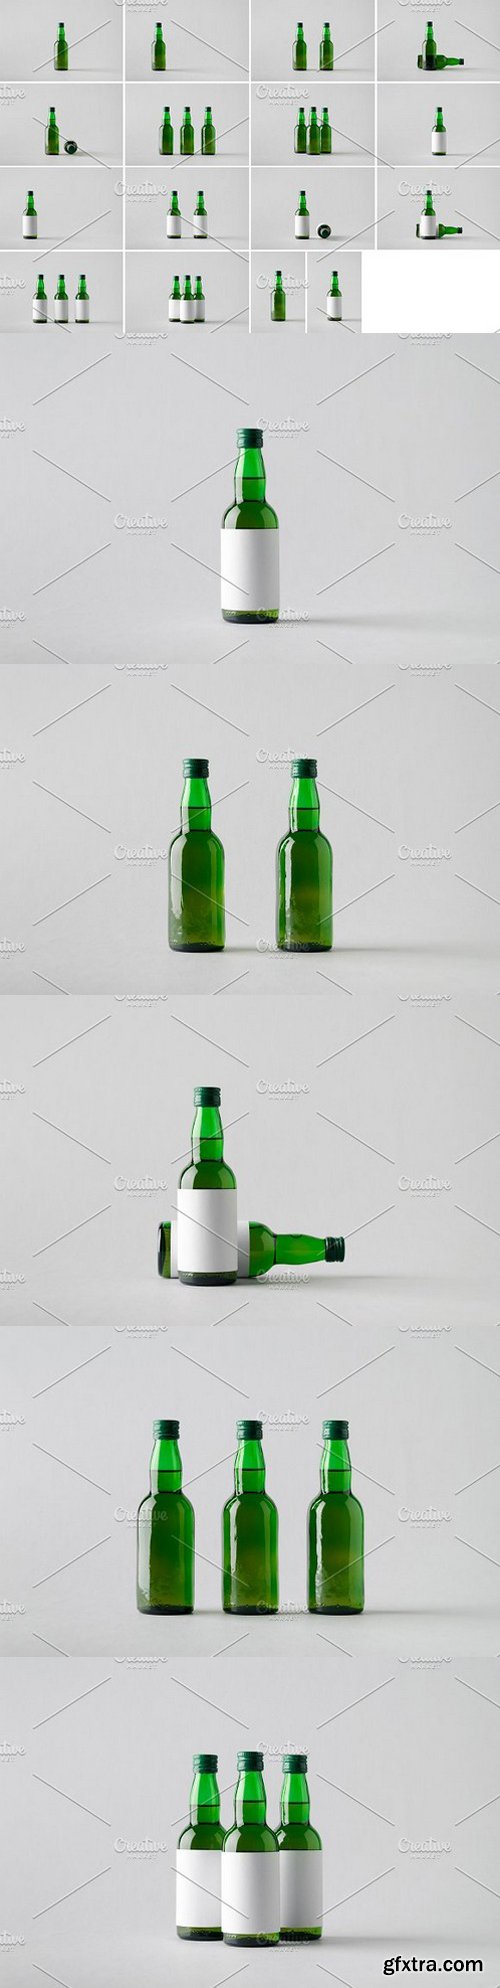 CM - Spirits Bottle Mock-Up Photo Bundle 1437244